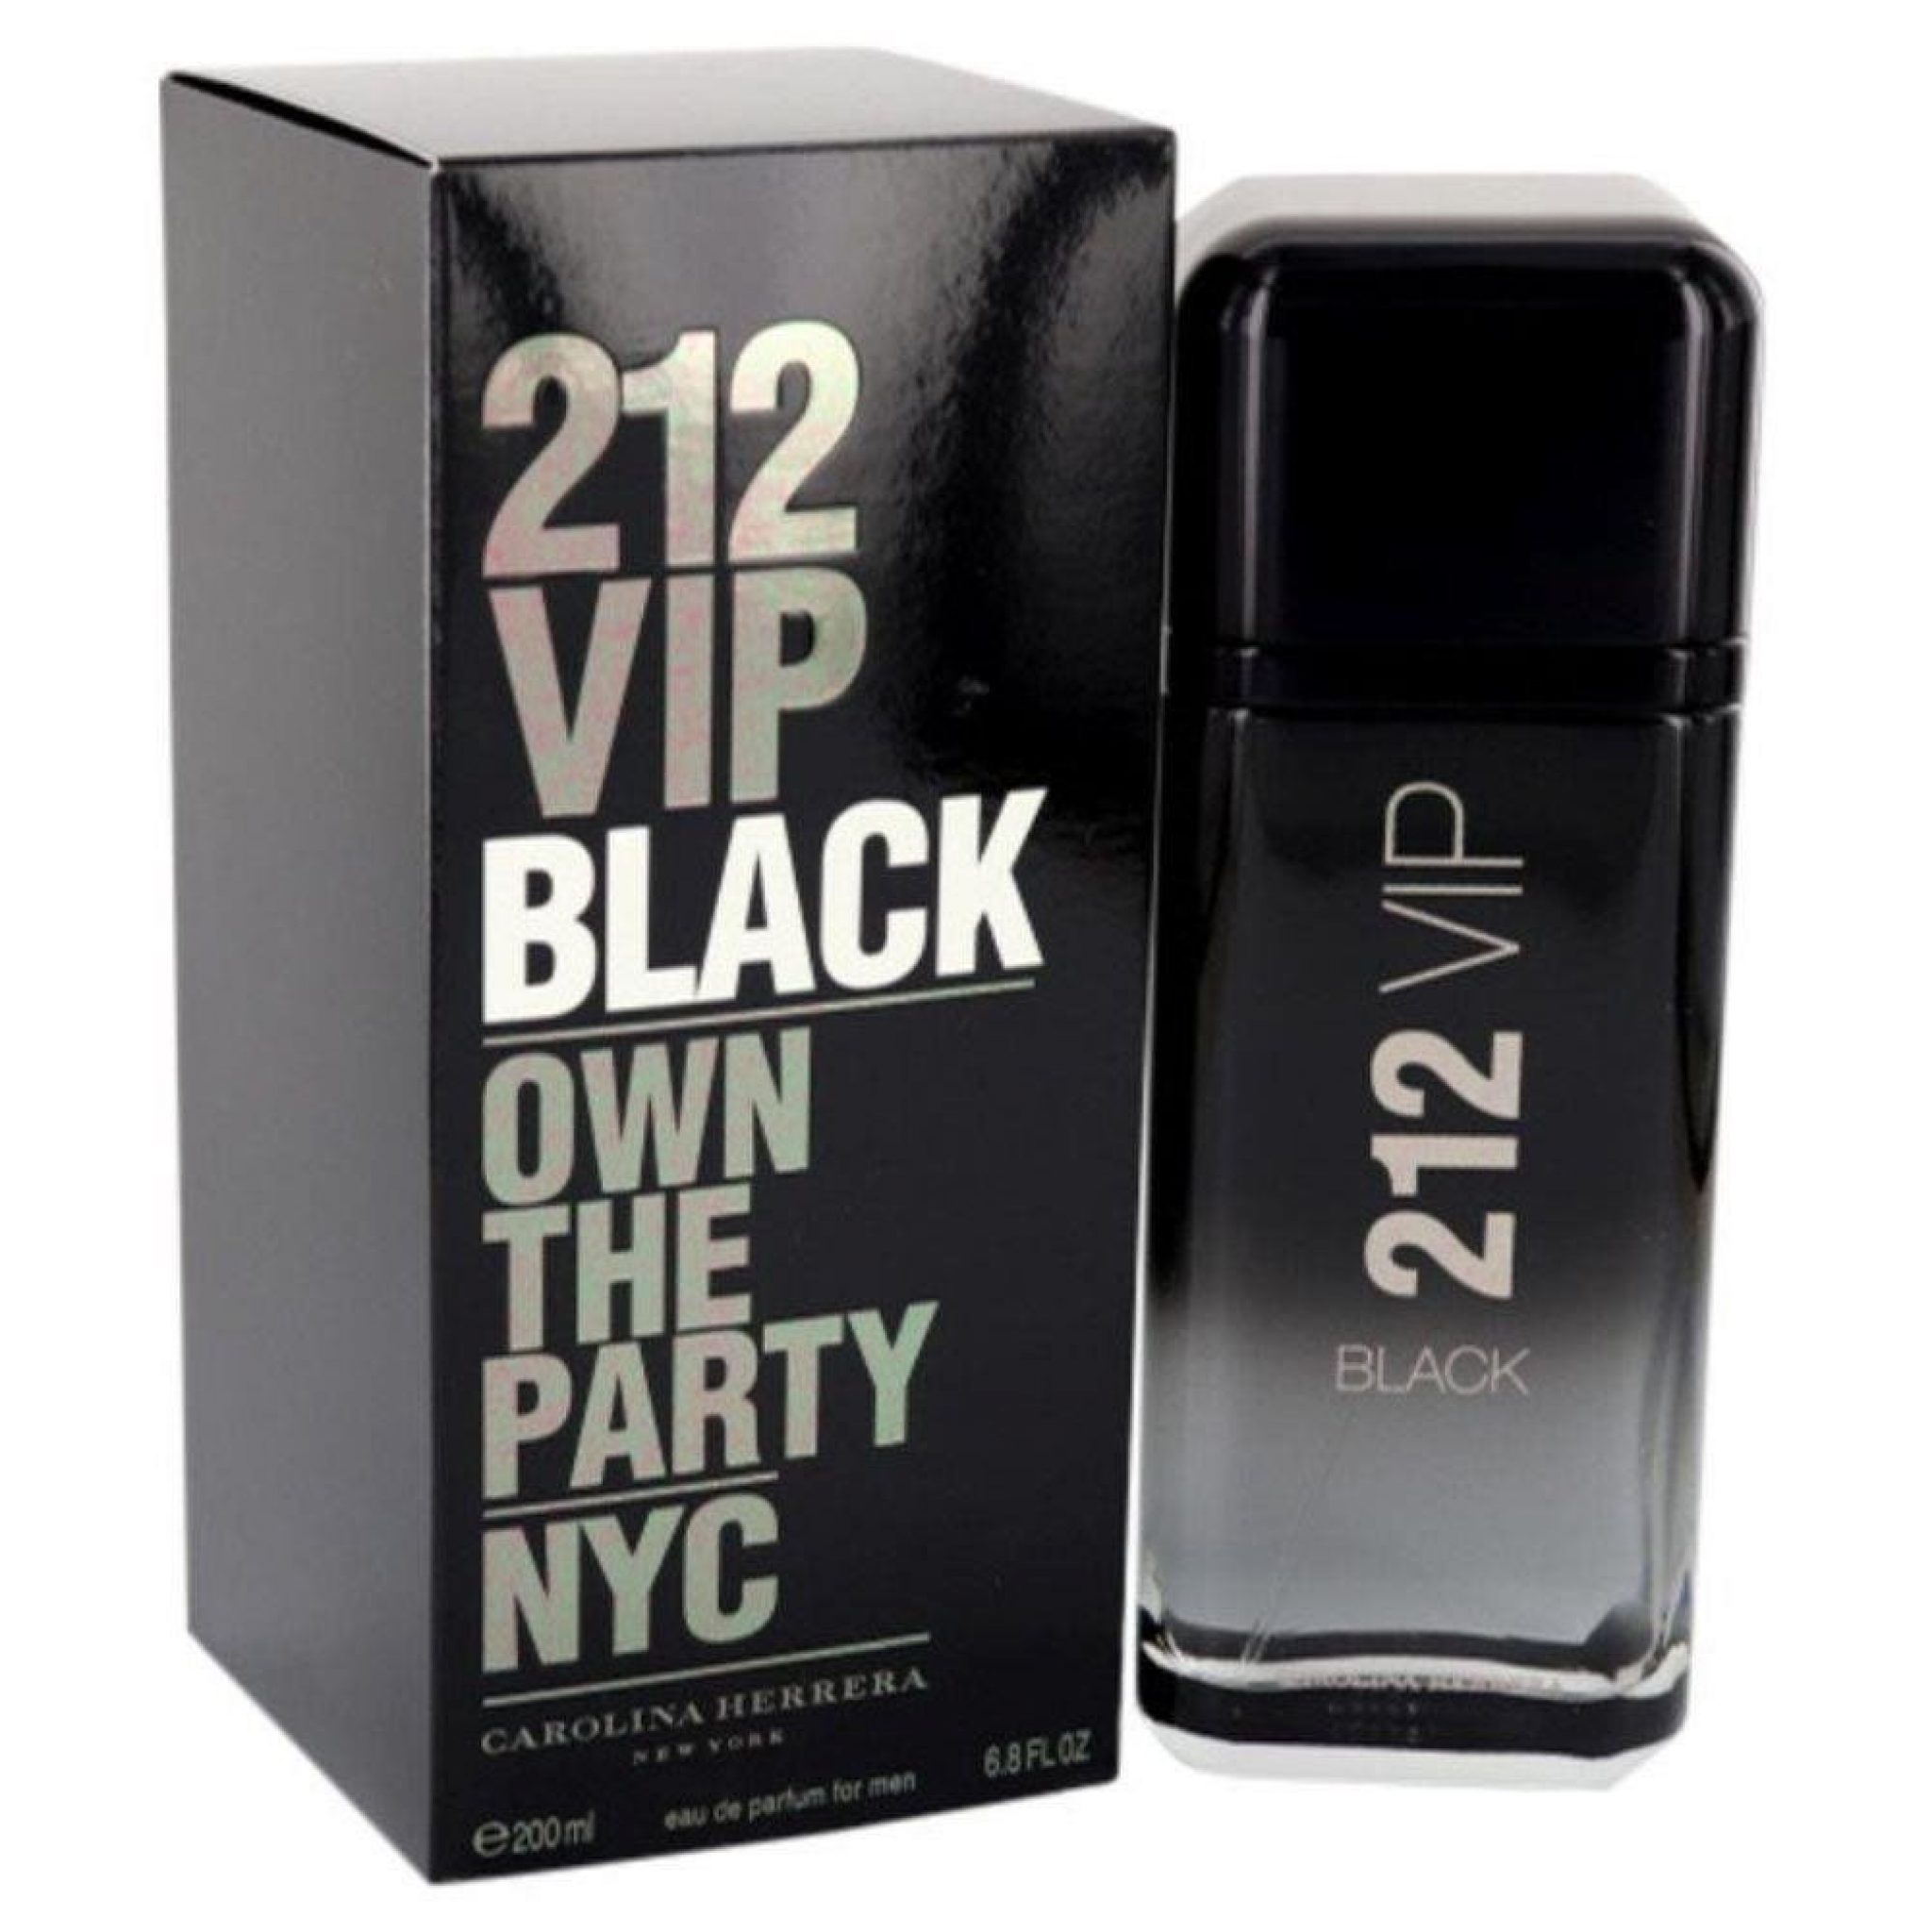 Черный вип. Carolina Herrera 212 VIP Black, 100 ml. 212 Вип Блэк мужские.